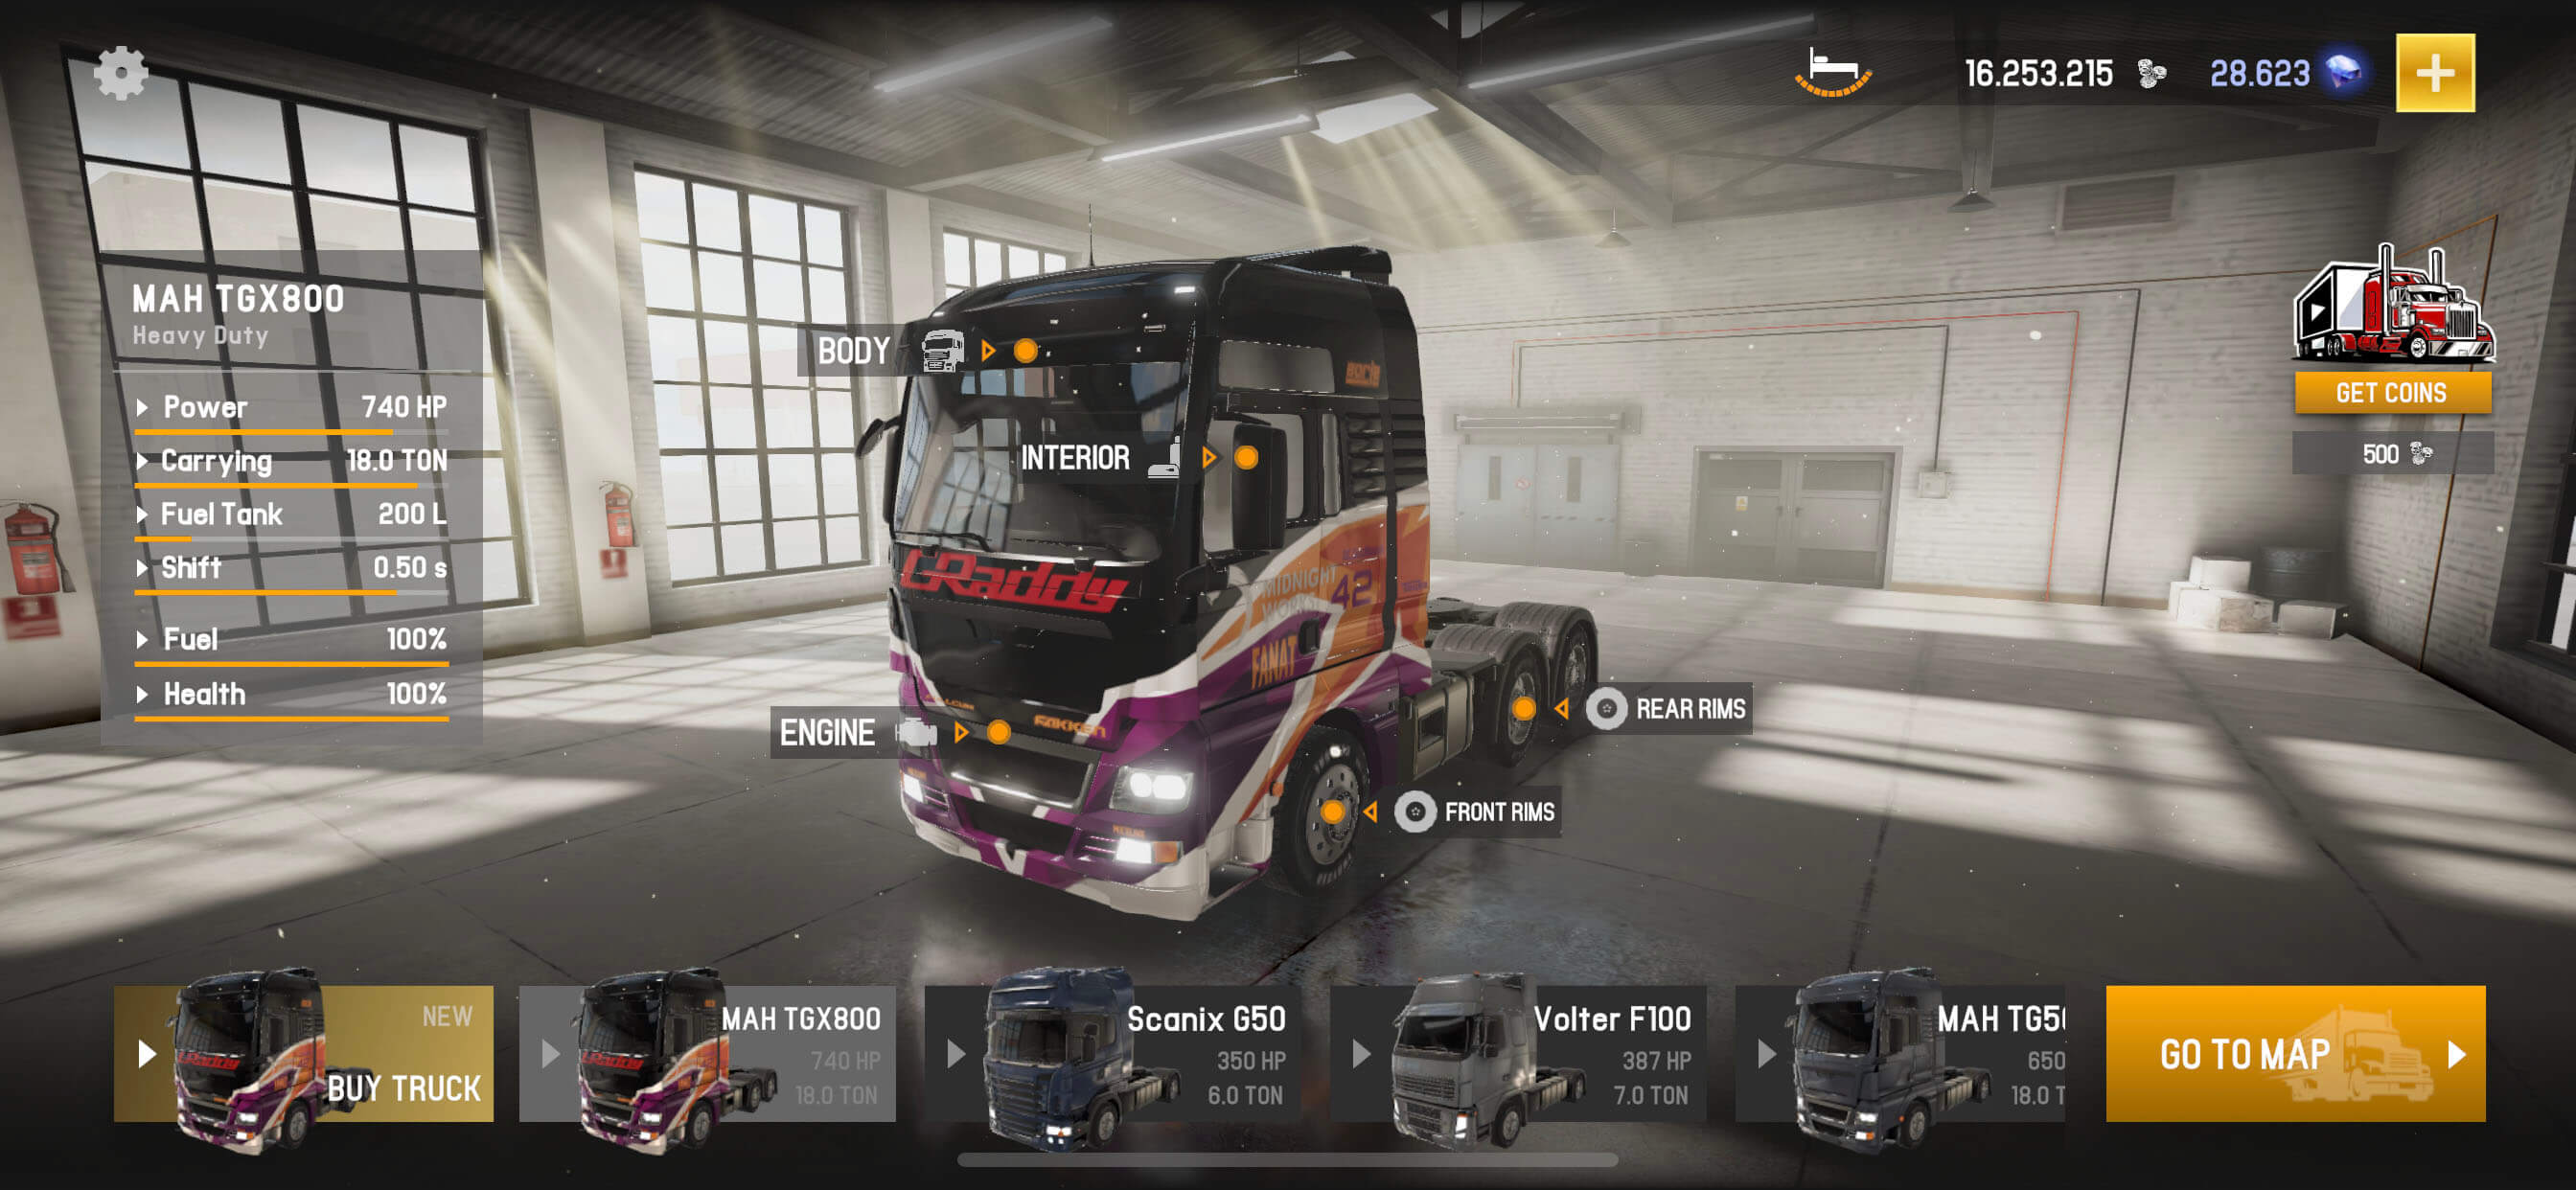 nl-truck-games-simulator-cargo-mod-ios1.jpg